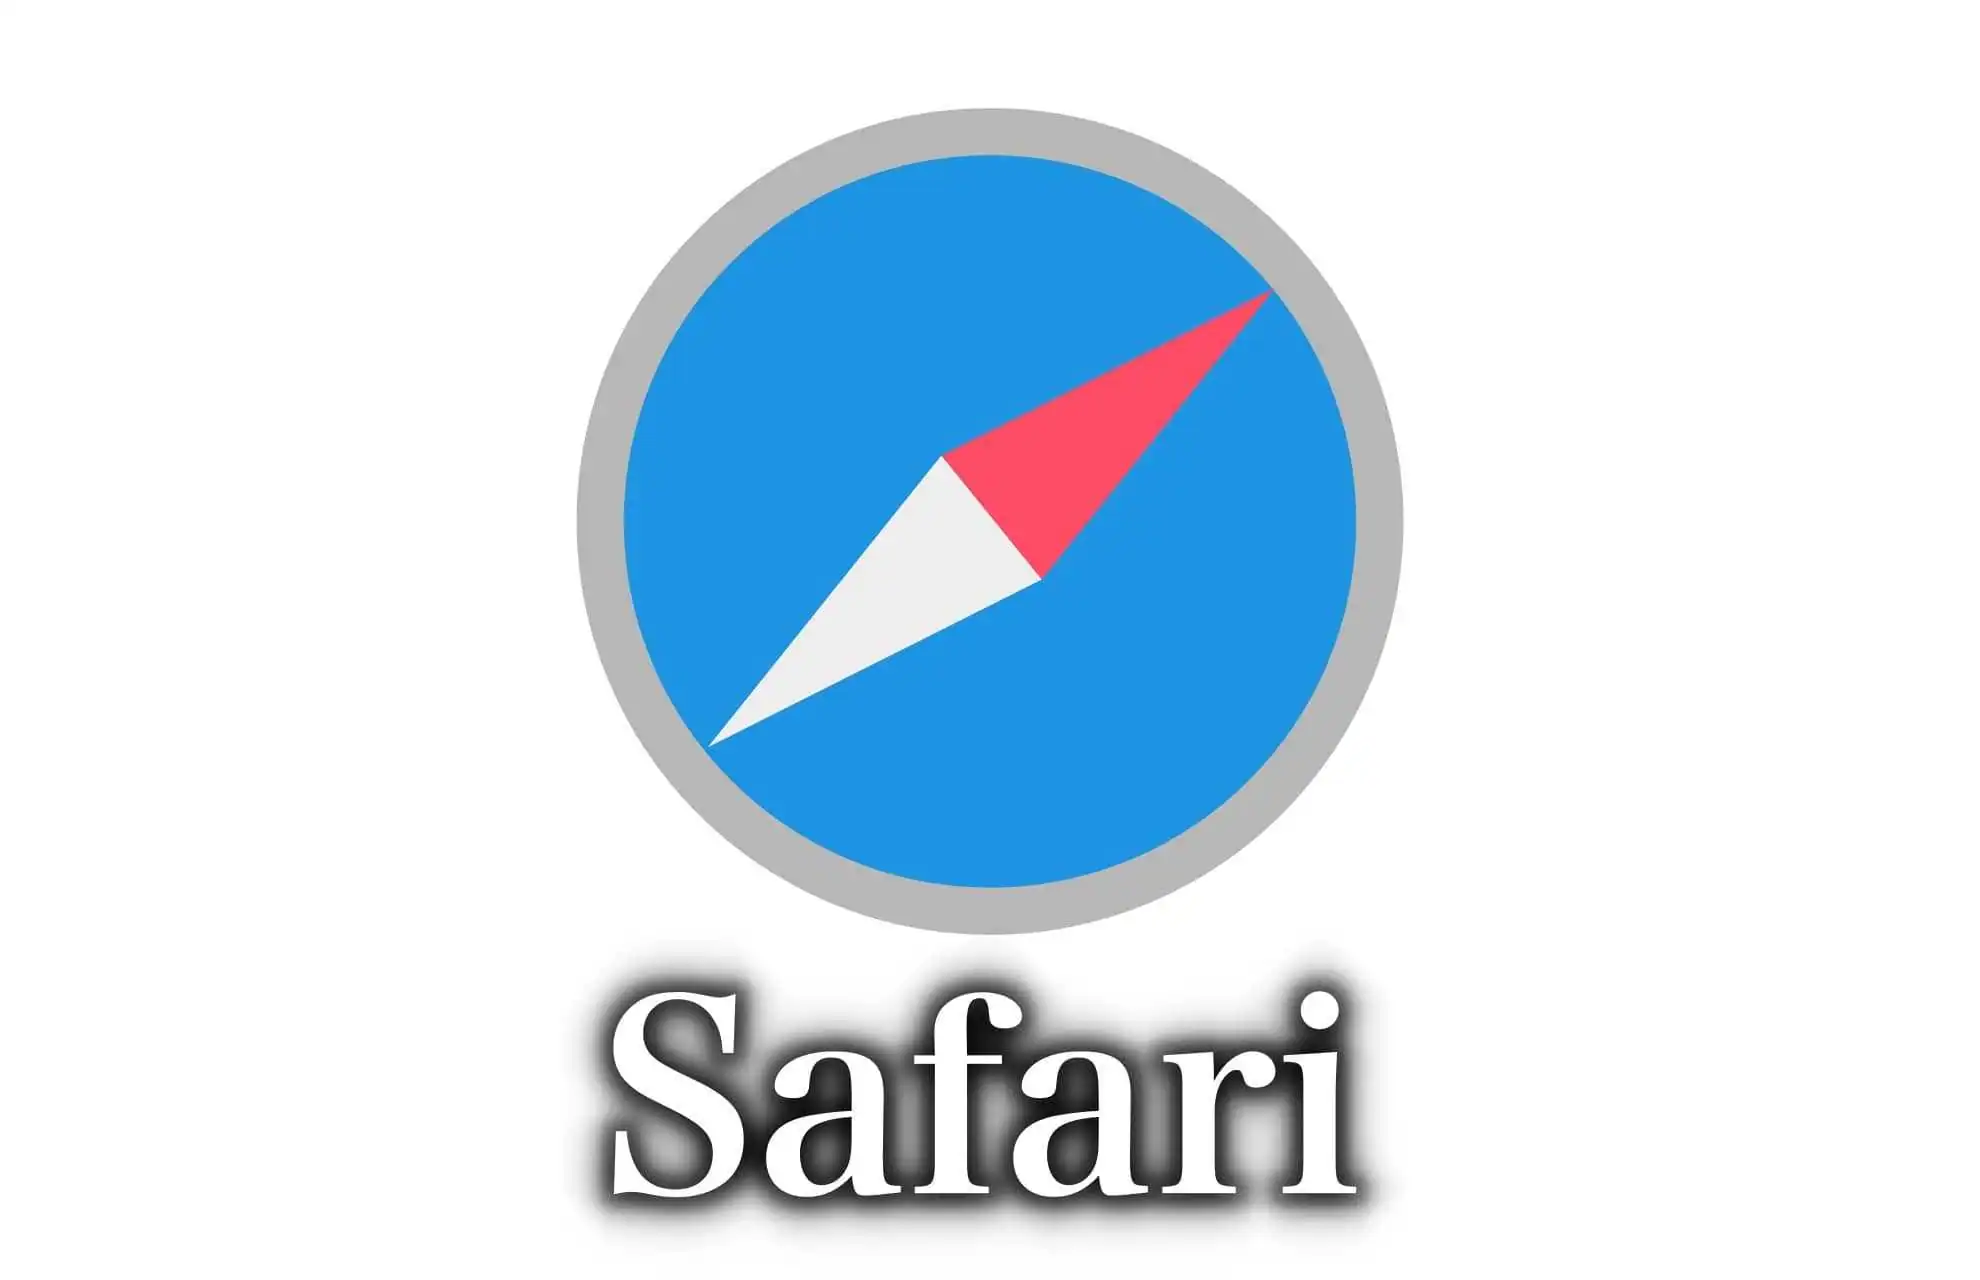 Safariアイコン風画像